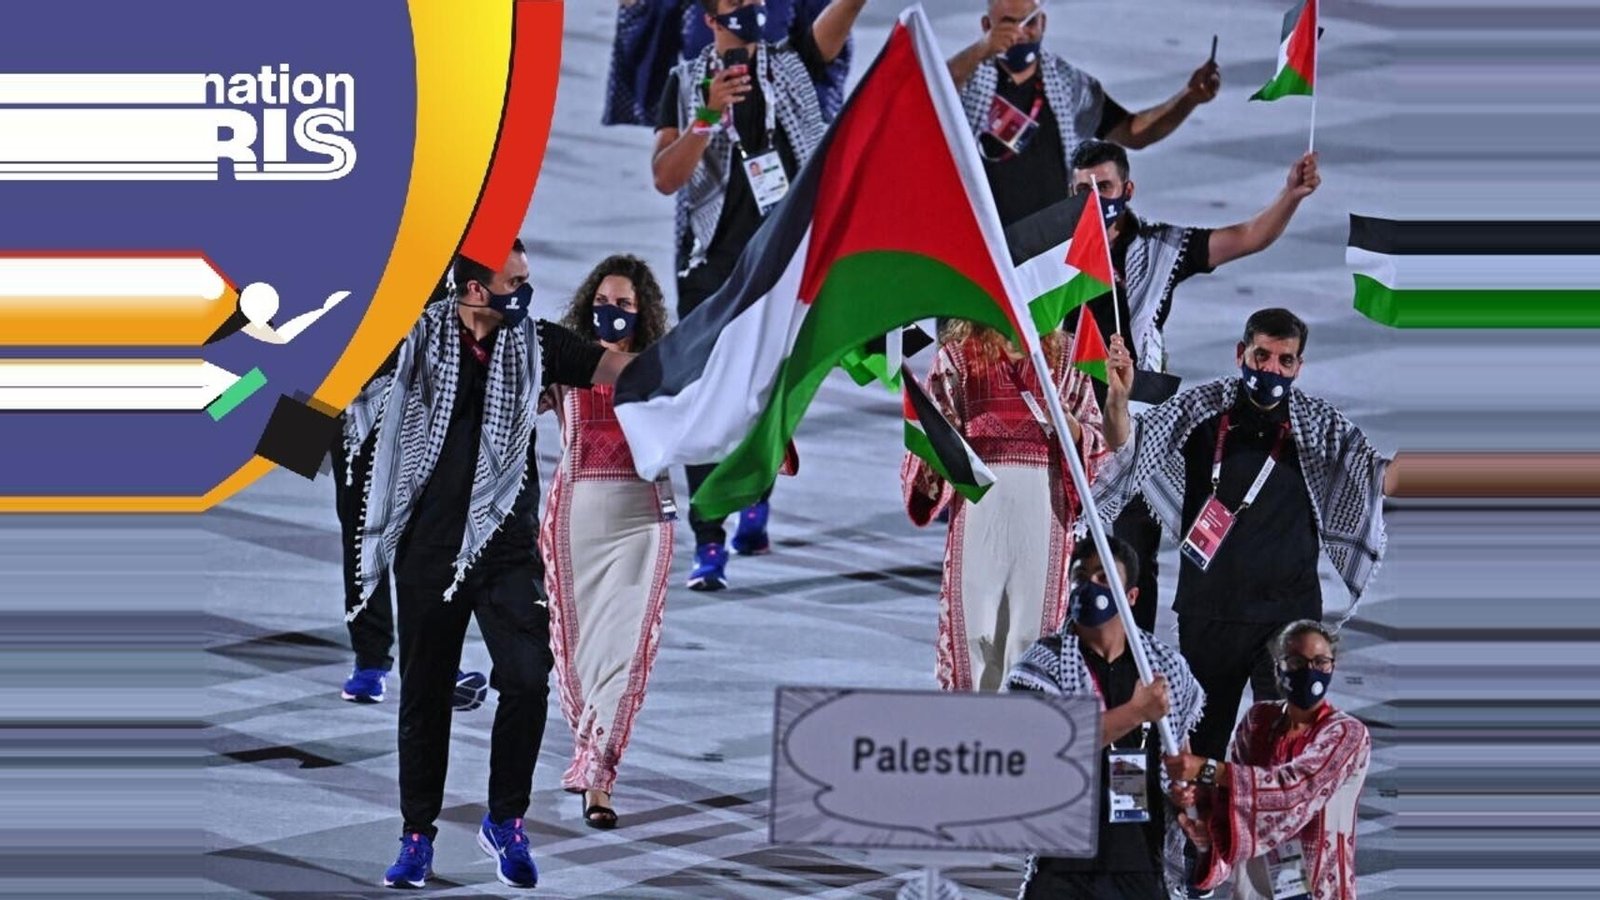 Palestinian athletes to be invited to Paris Olympics: IOC